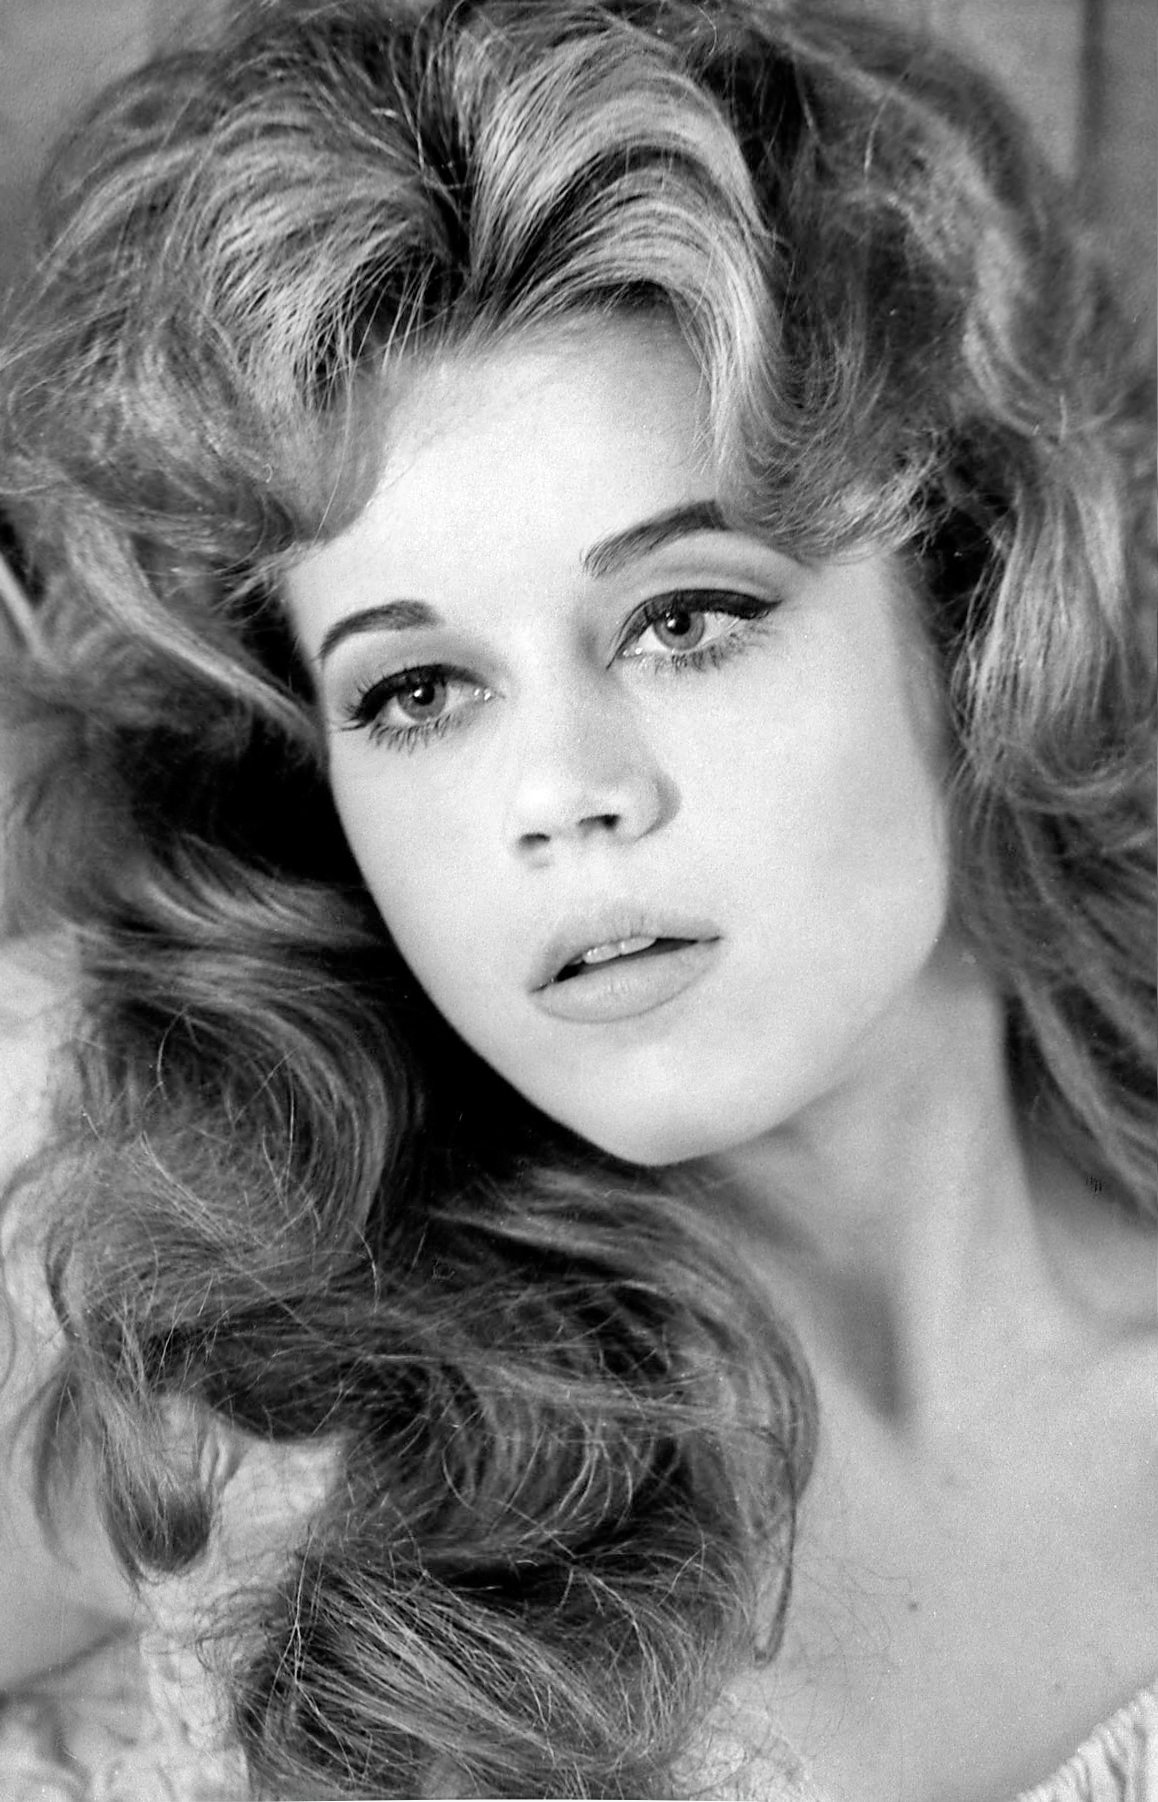 Jane Fonda photo 41 of 348 pics, wallpaper - photo #126266 - ThePlace2